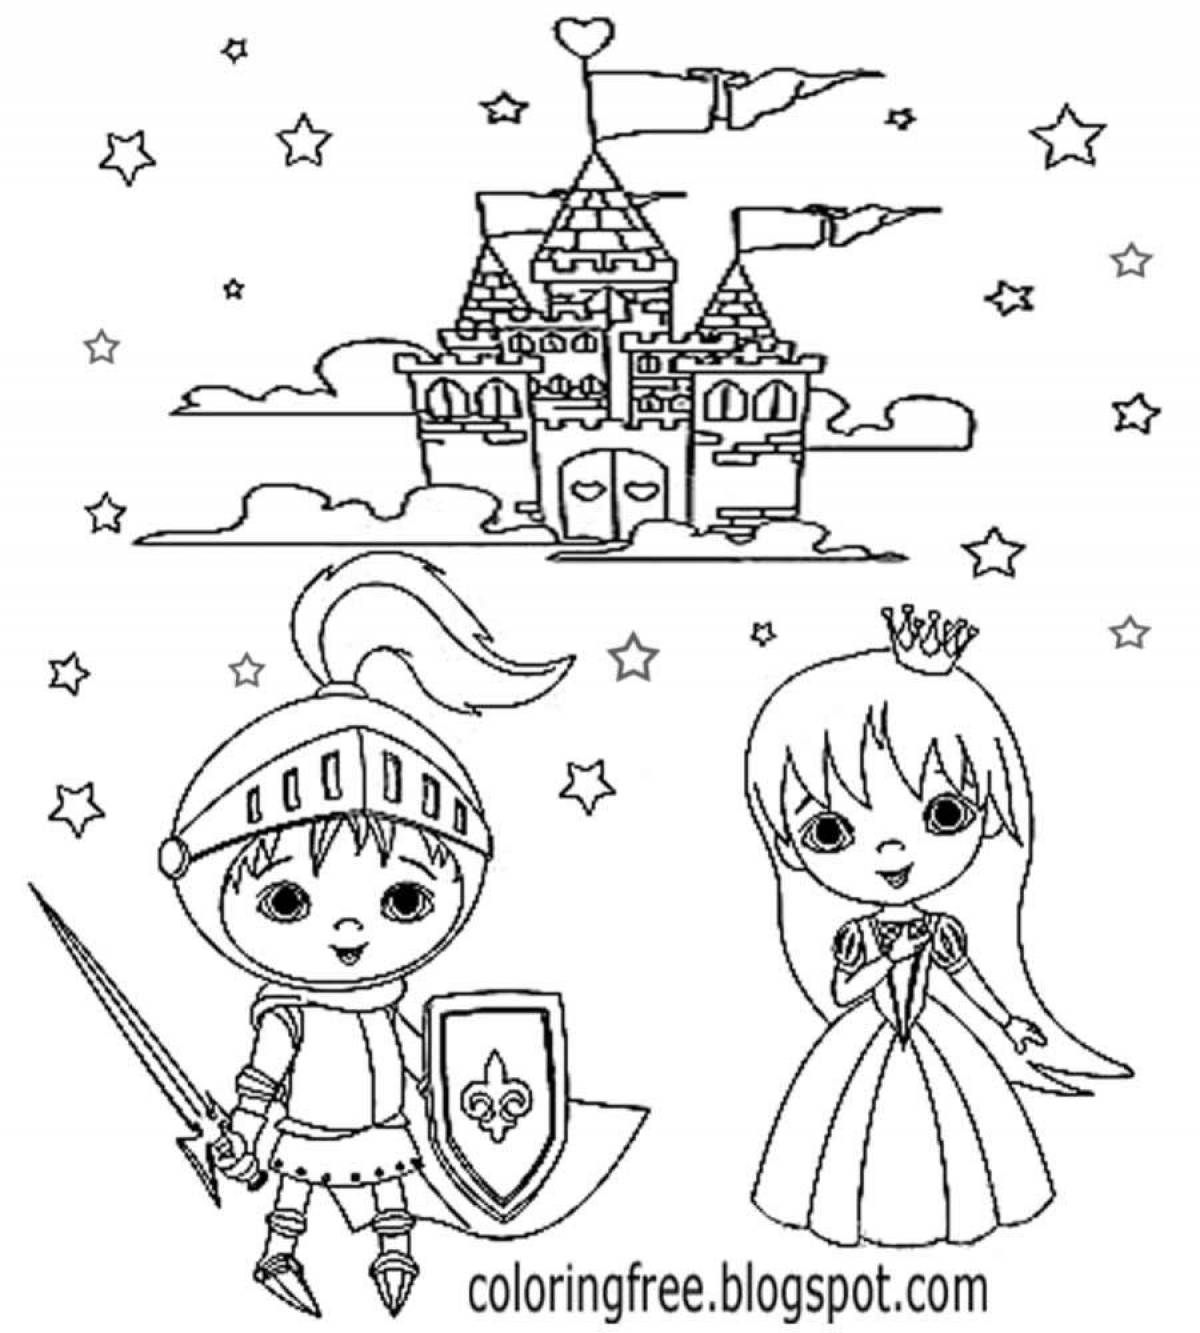 Royal princess castle coloring page